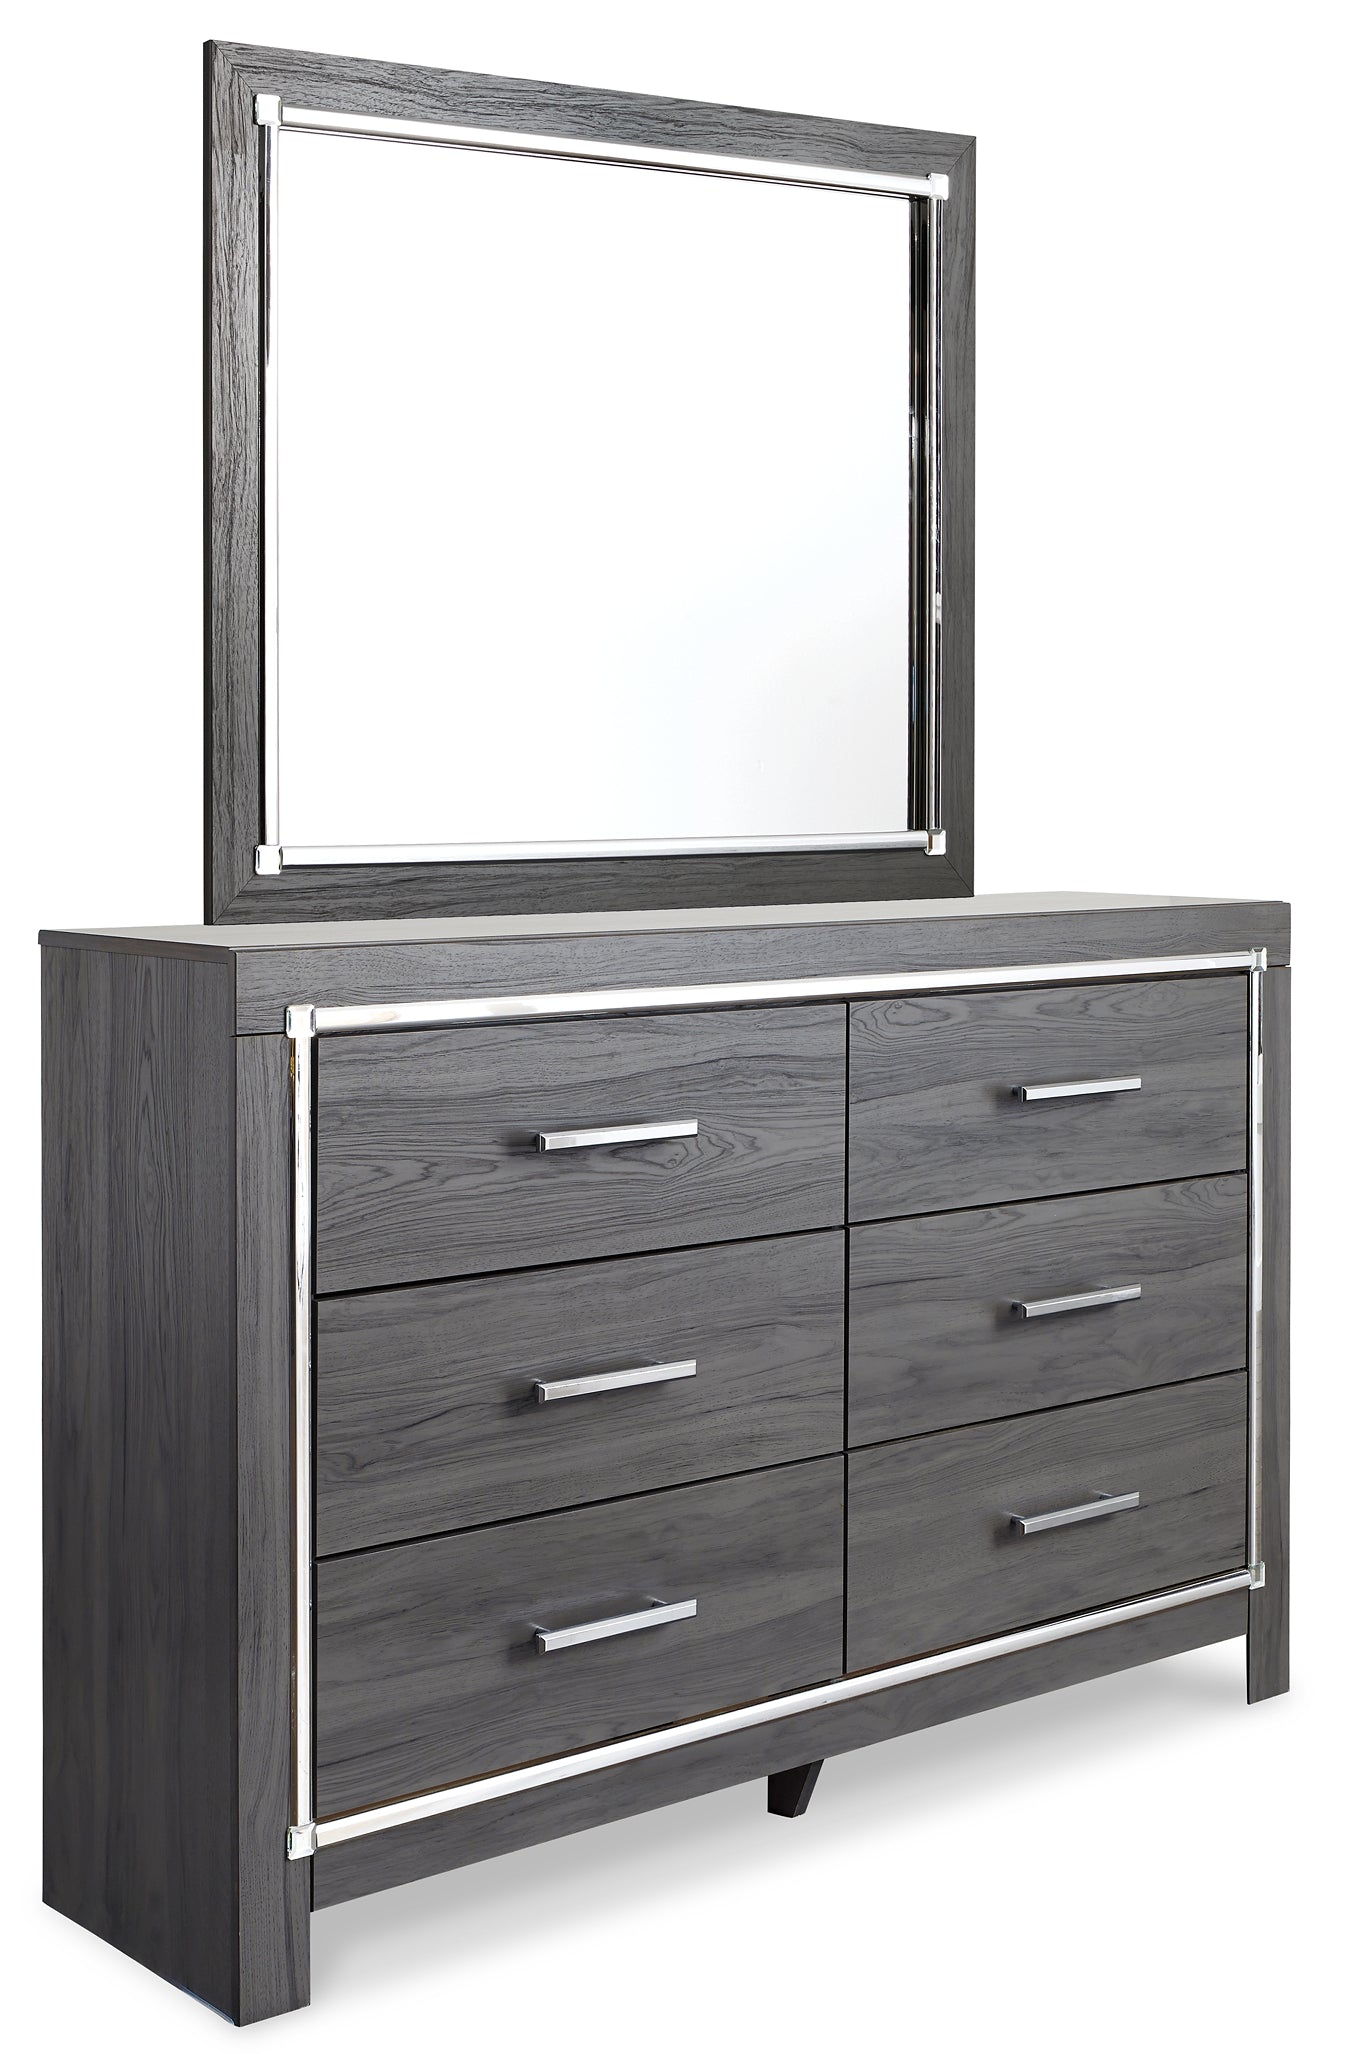 Lodanna King/California King Upholstered Panel Headboard with Mirrored Dresser